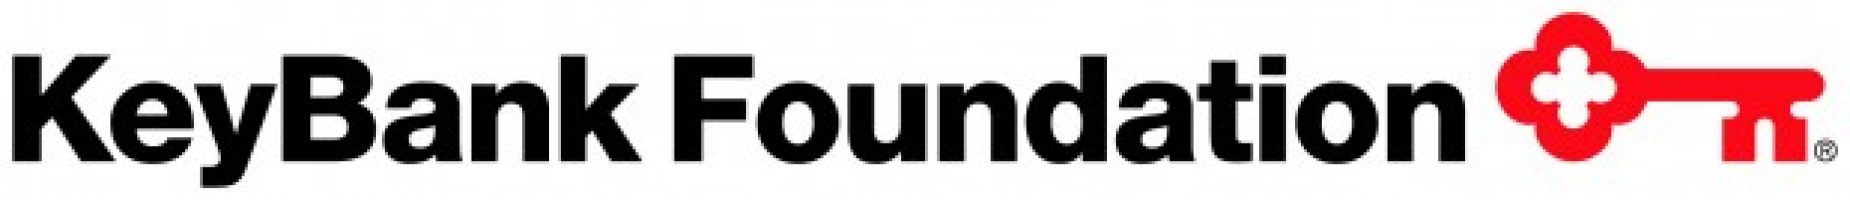 KeyBank Foundation Logo